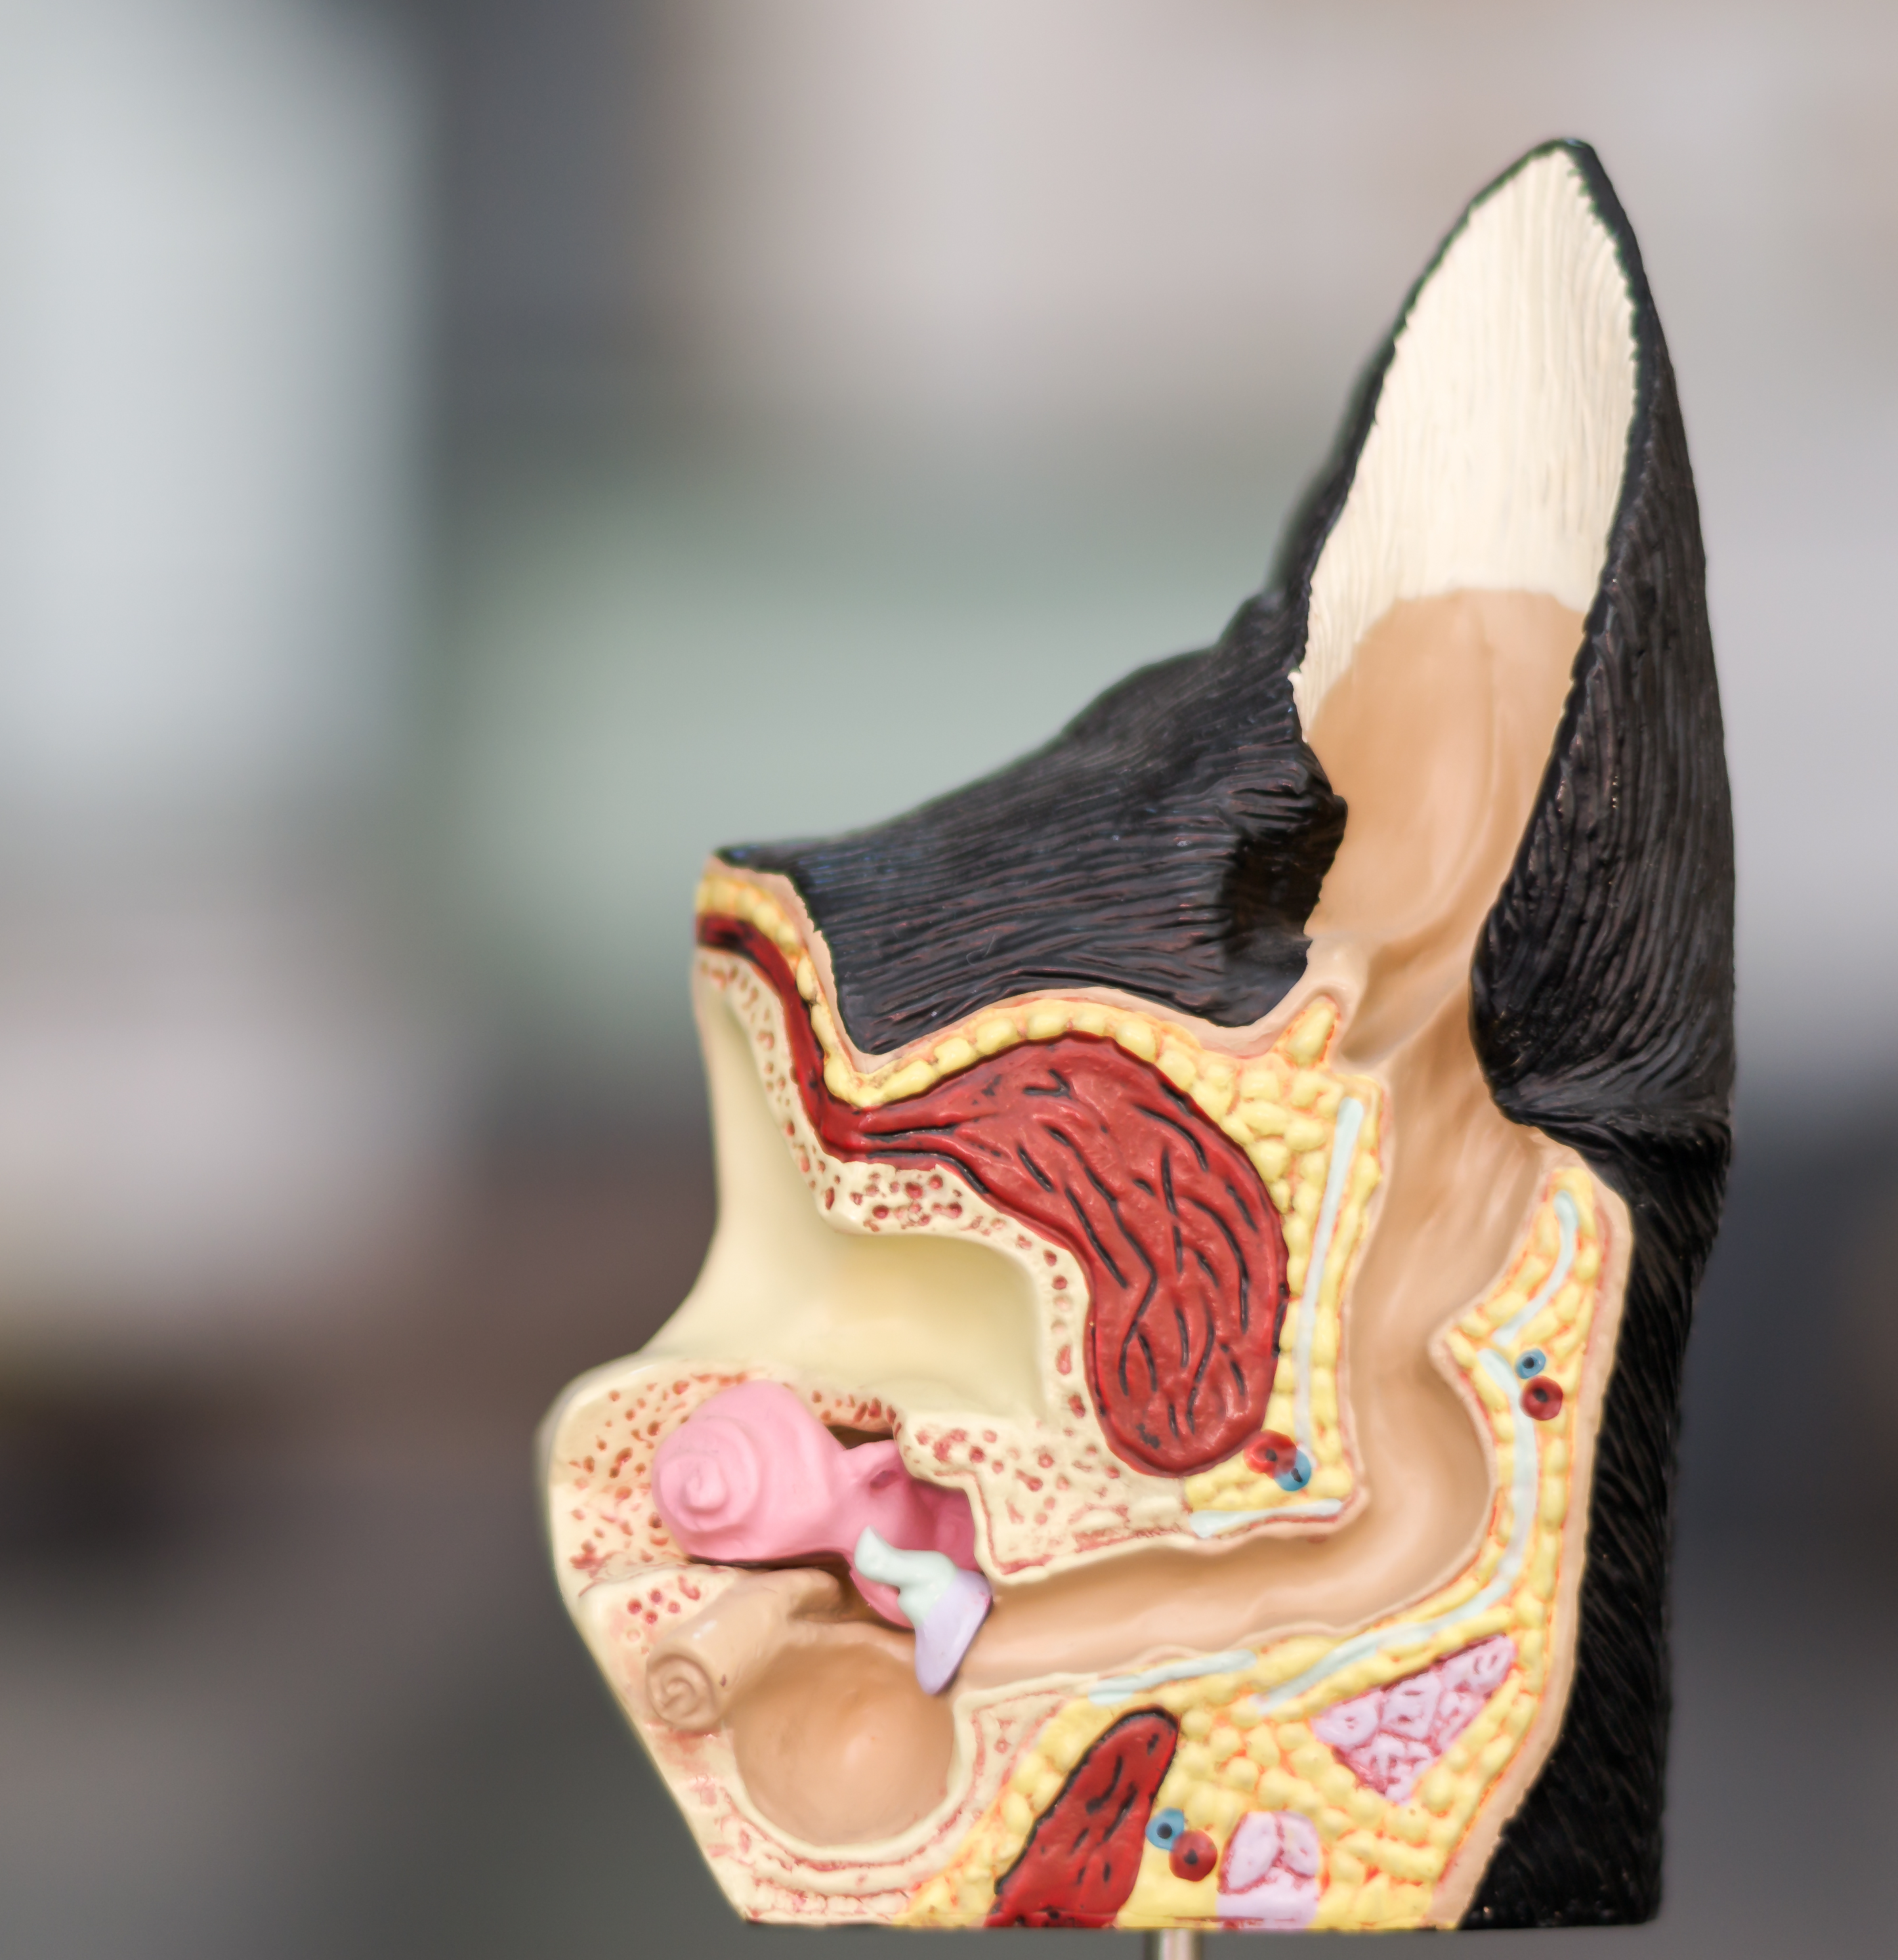 dog ear anatomy mold